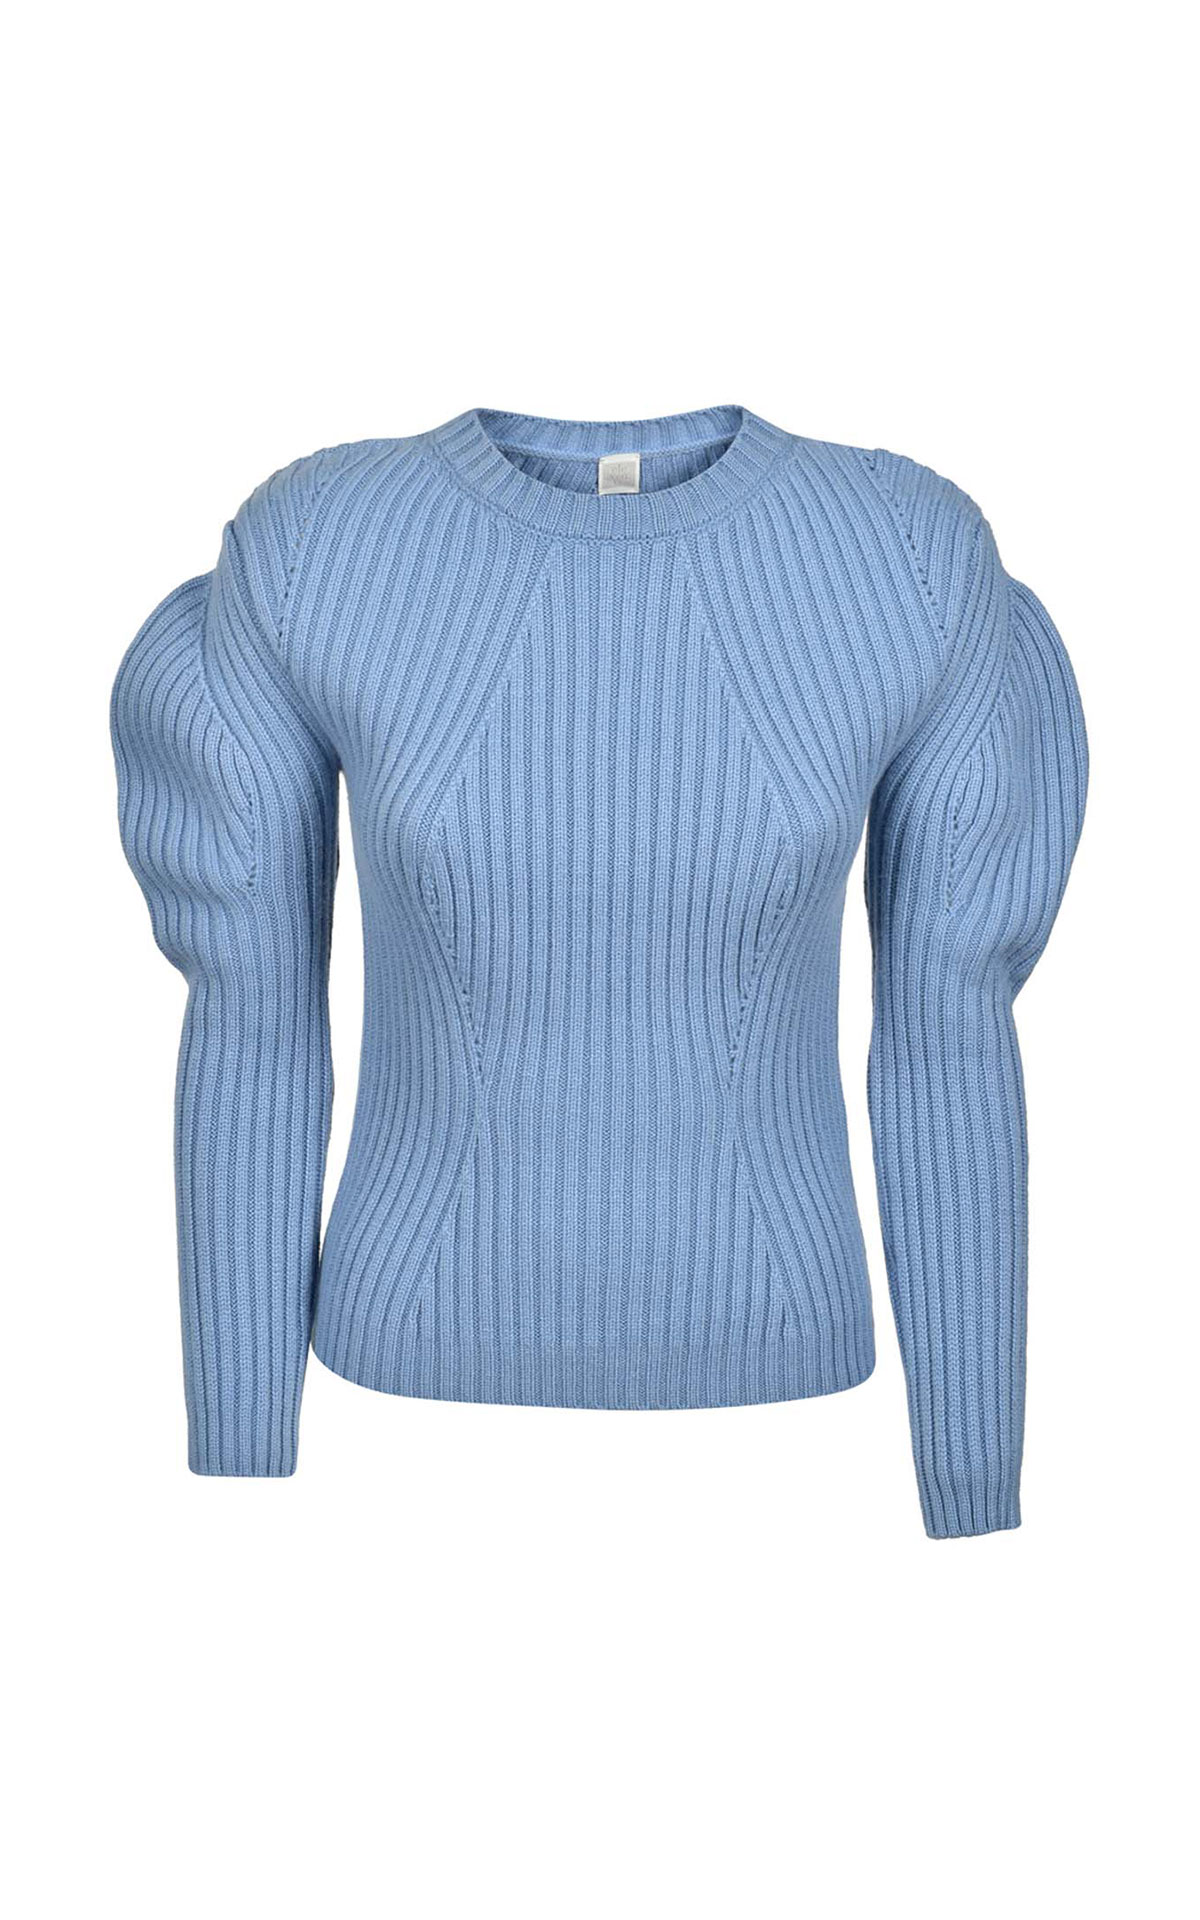 Eleventy Blue sweater from Bicester Village